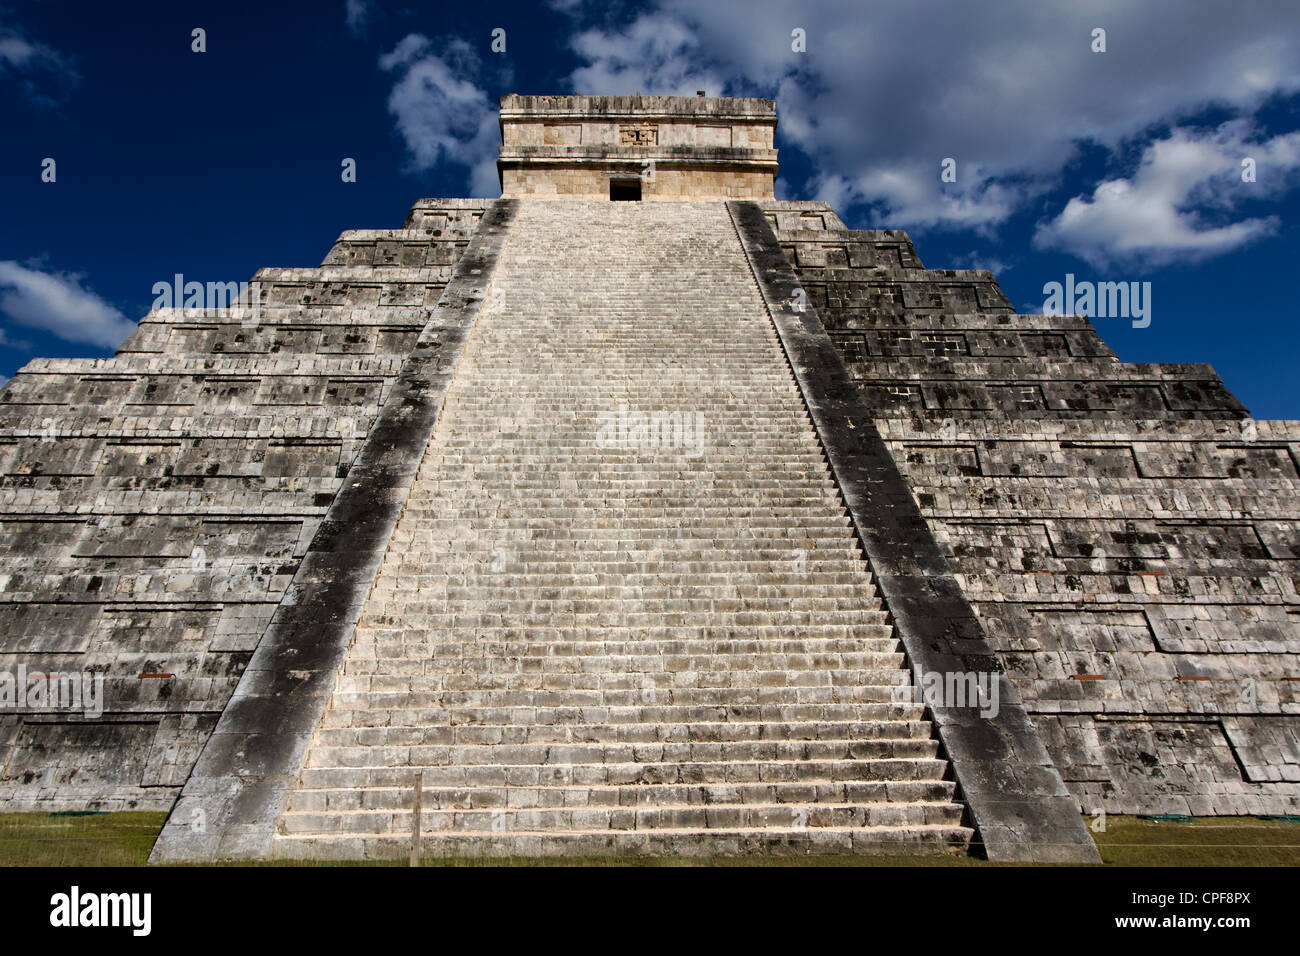 View up the stairs of Kukulkan Pyramid at Chichen Itza, Yucatan, Mexico. Stock Photo